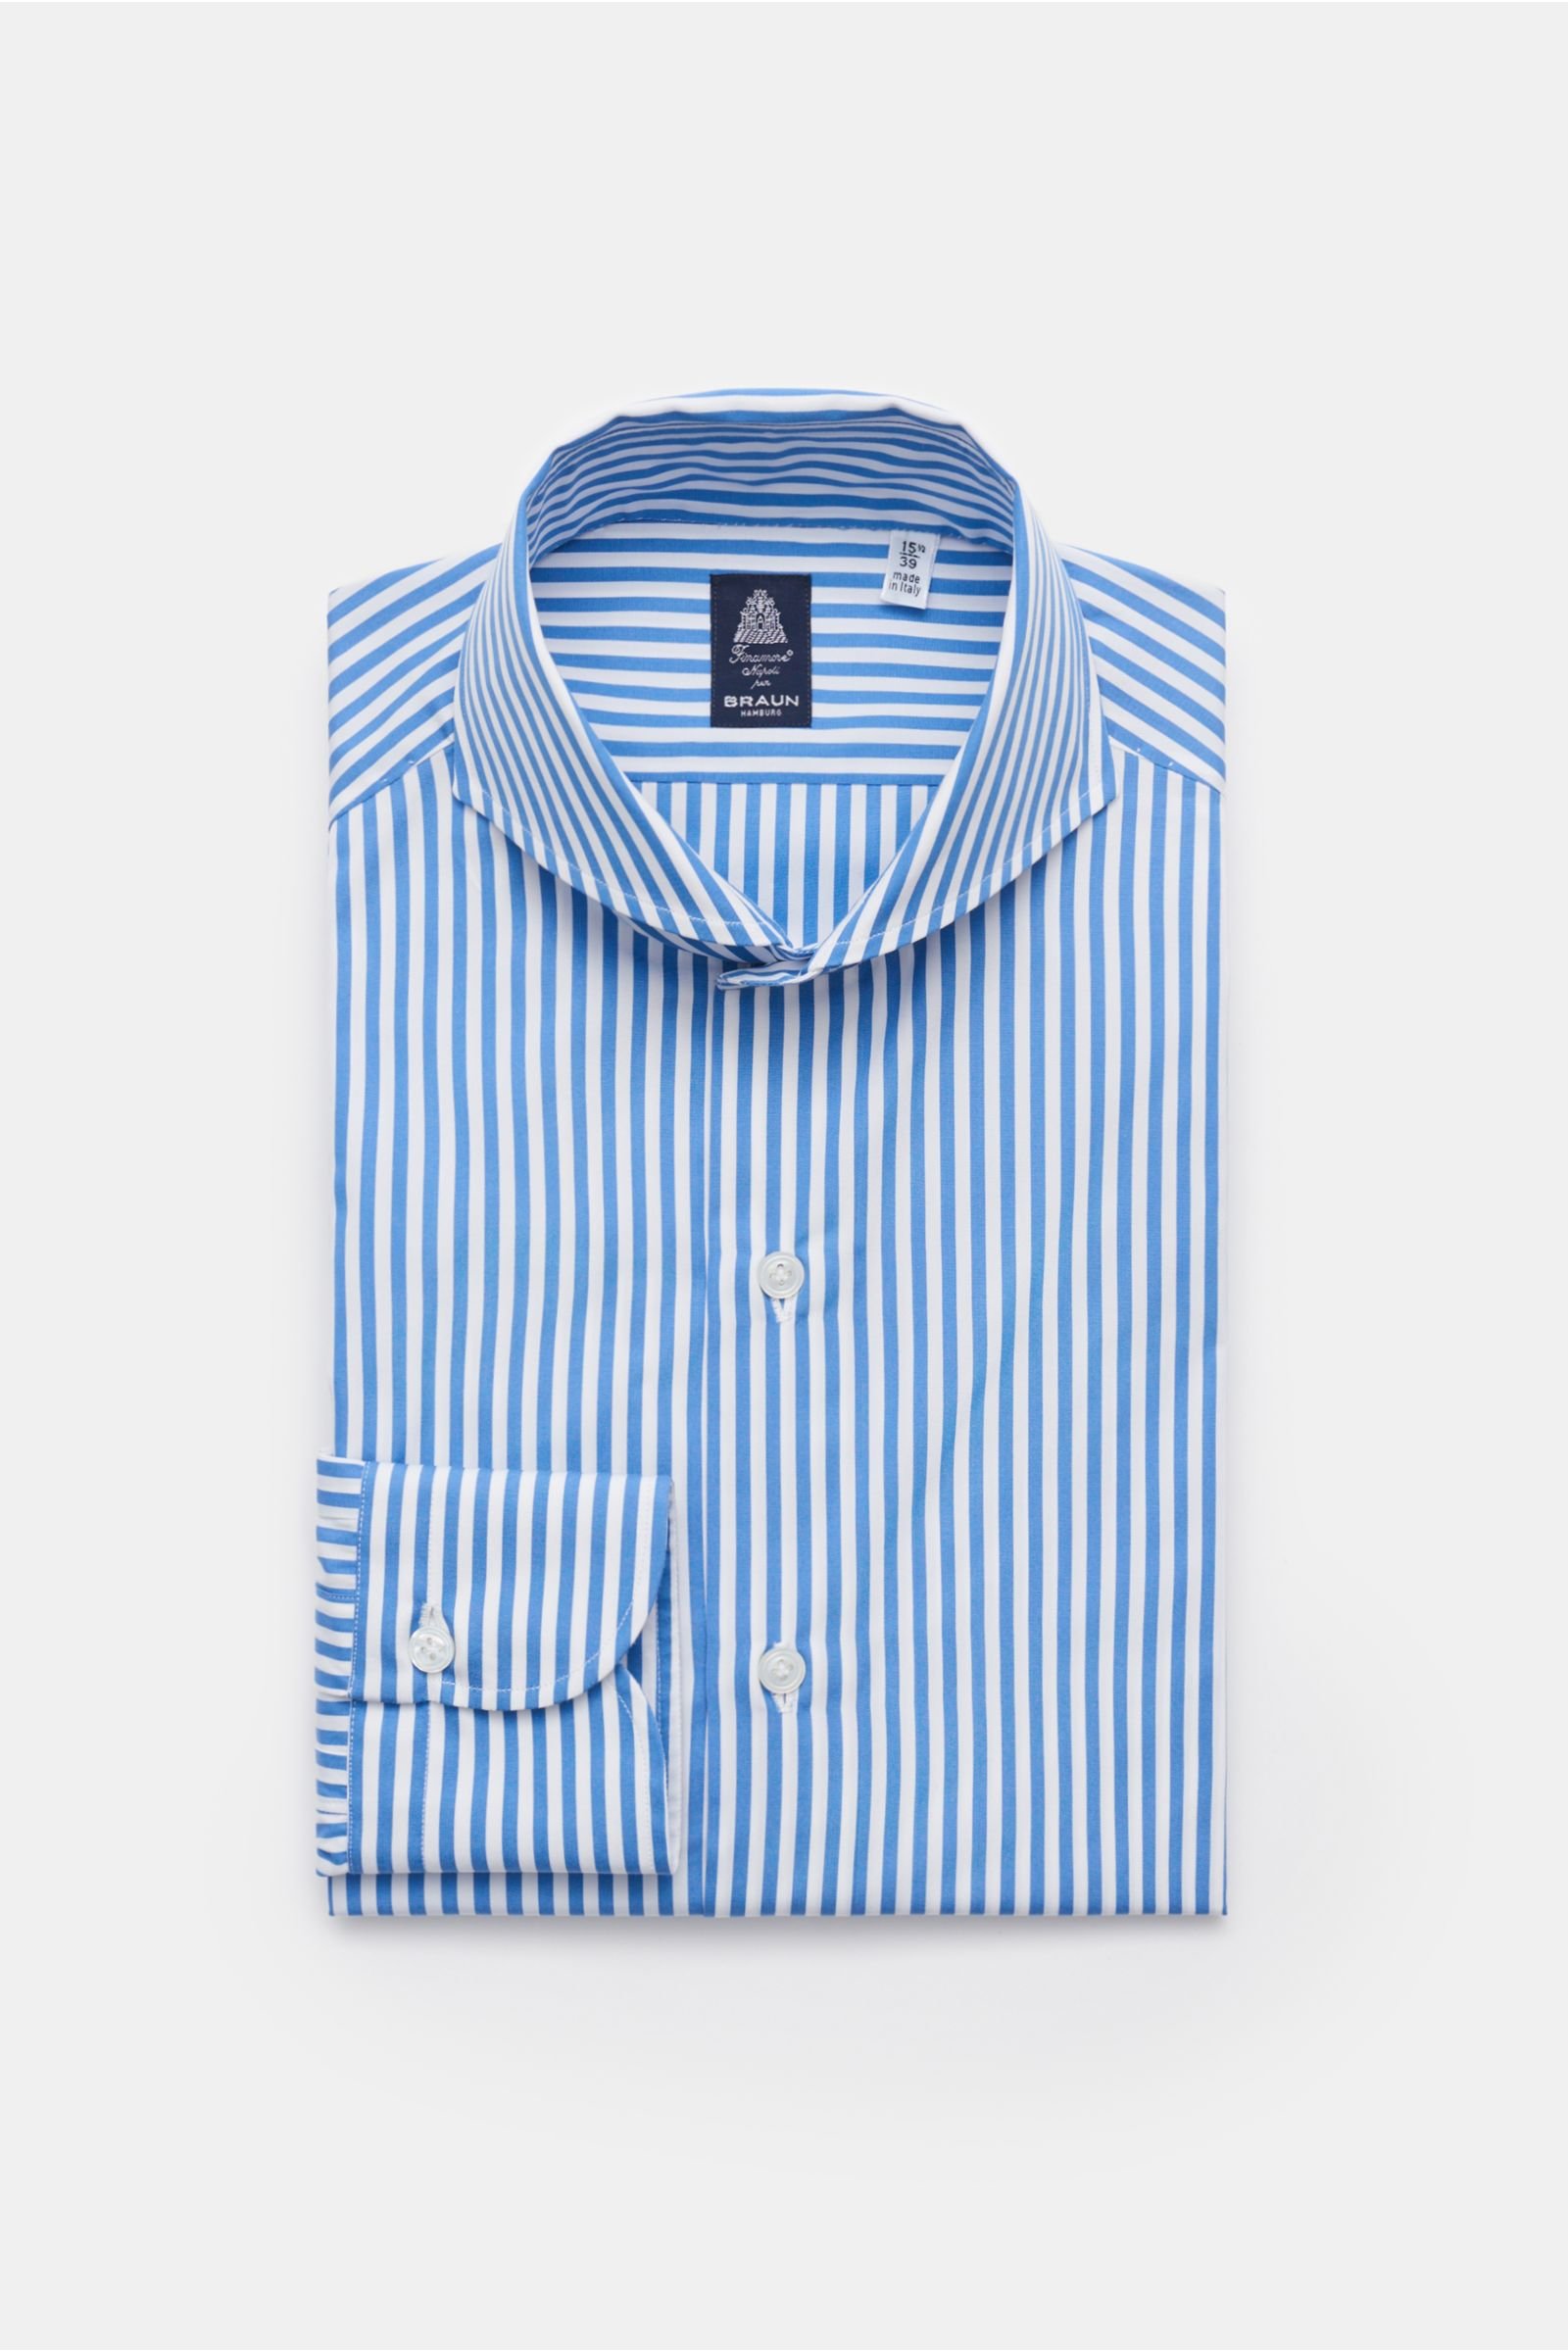 Business shirt 'Sergio Napoli' shark collar blue/white striped